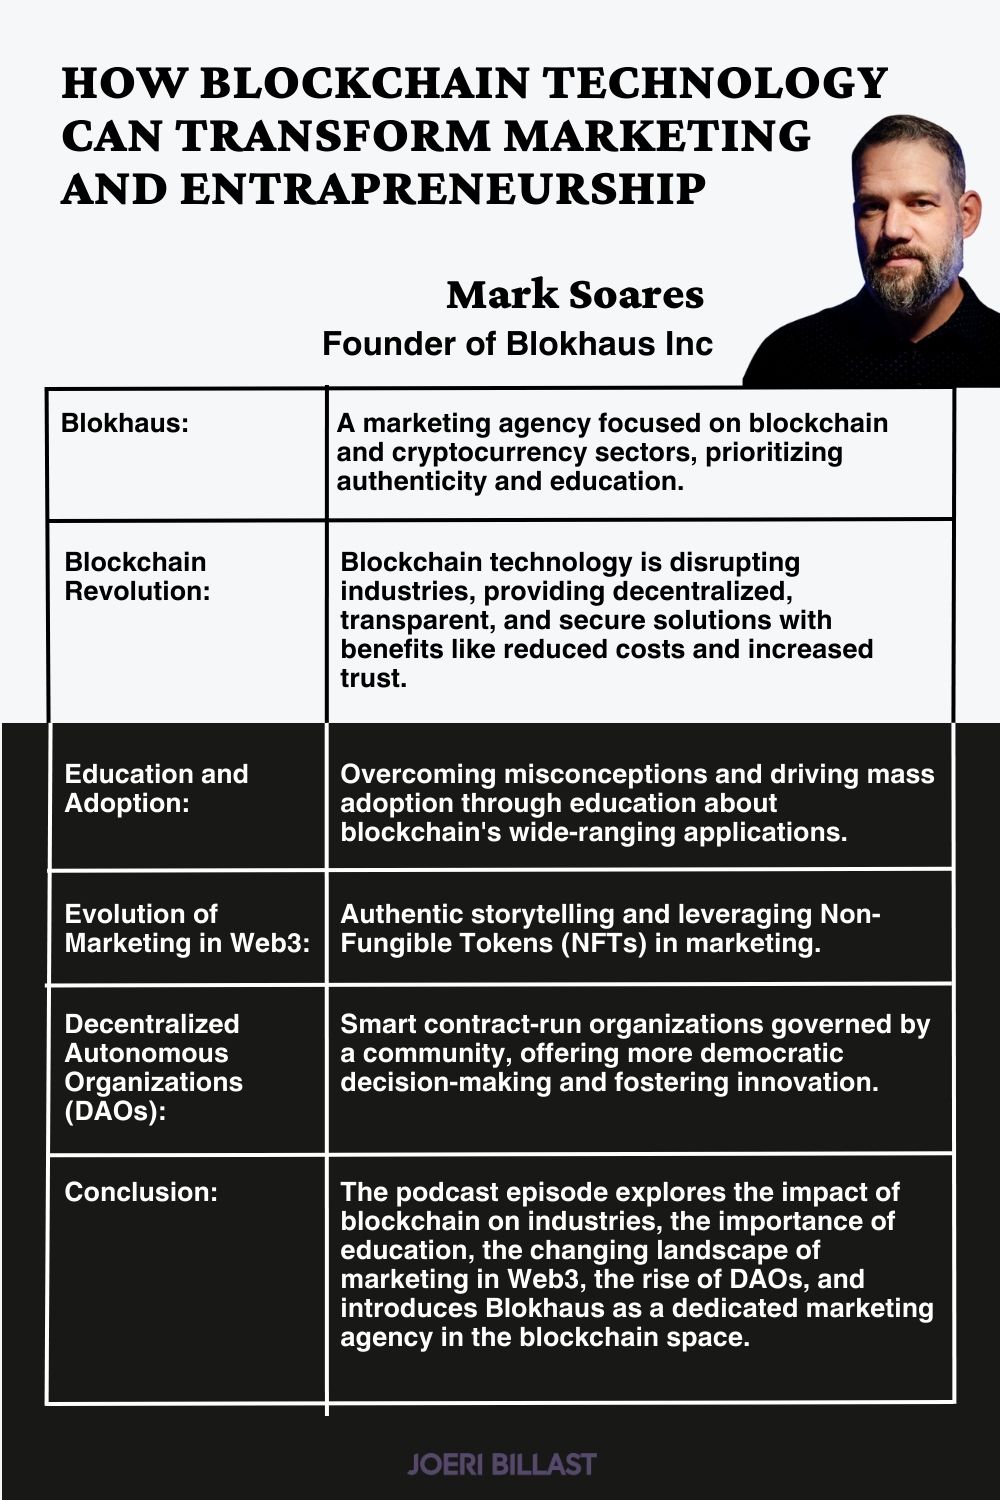 How Blockchain Technology Can Transform Marketing and Entrepreneurship – with Mark Soares